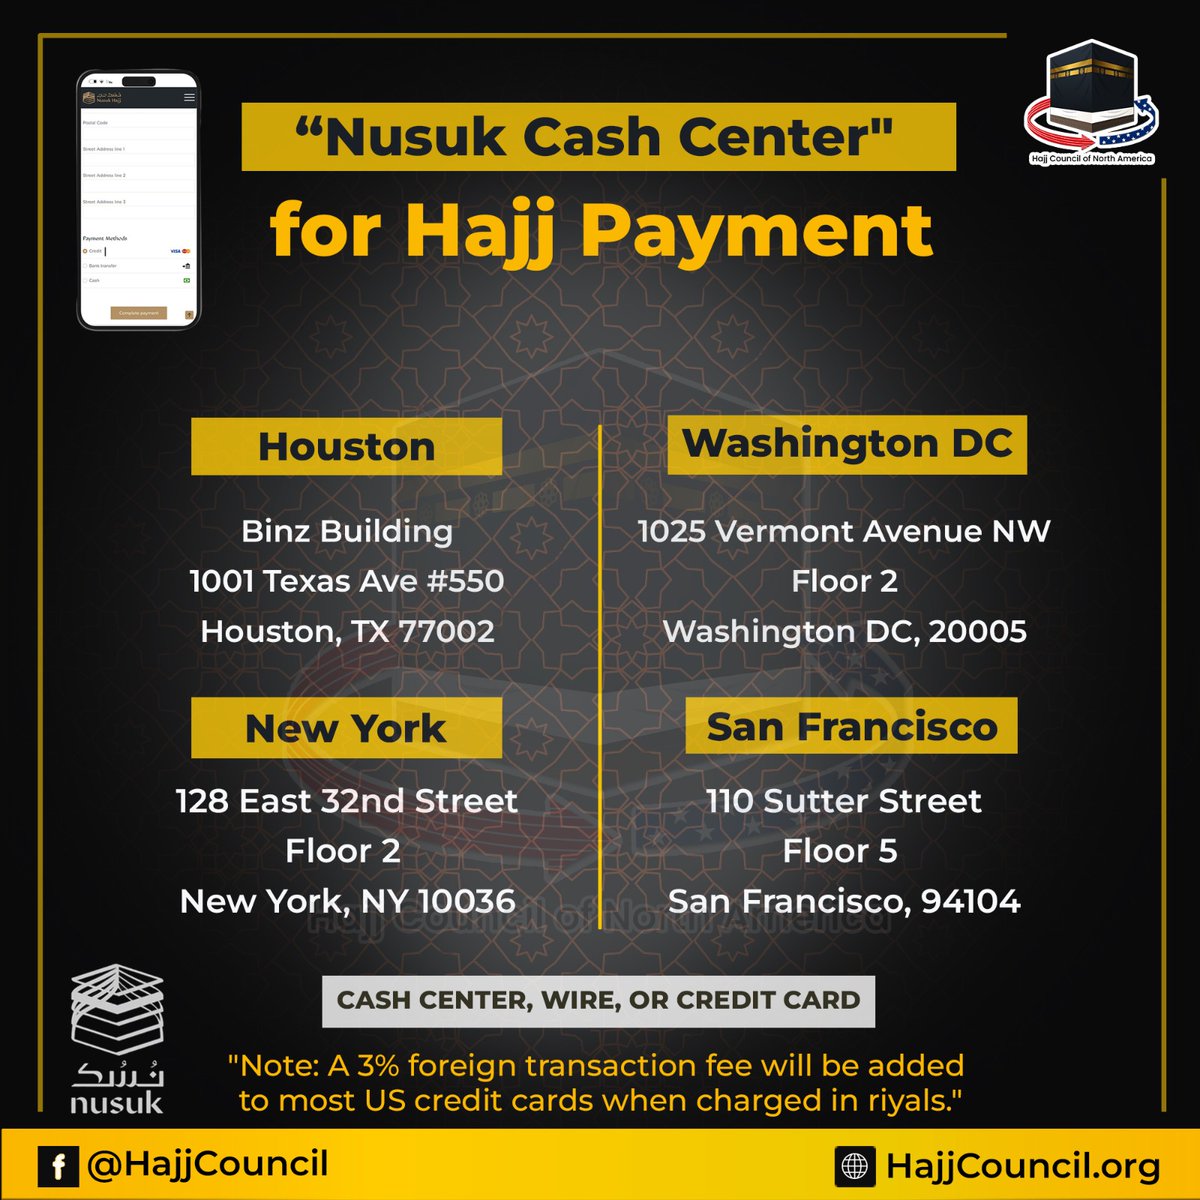 Experience the ease of payment at Nusuk Cash Centers in the US! 
#HajjPayment #ConvenientOptions #EasyBooking #hajj #Umrah2023 #makkah #hajj2023 #umrahtrip #UmrahVisa #Umrah #SeptemberUmrah #SpiritualJourney #Pilgrimage #BlessedMonth #booknow